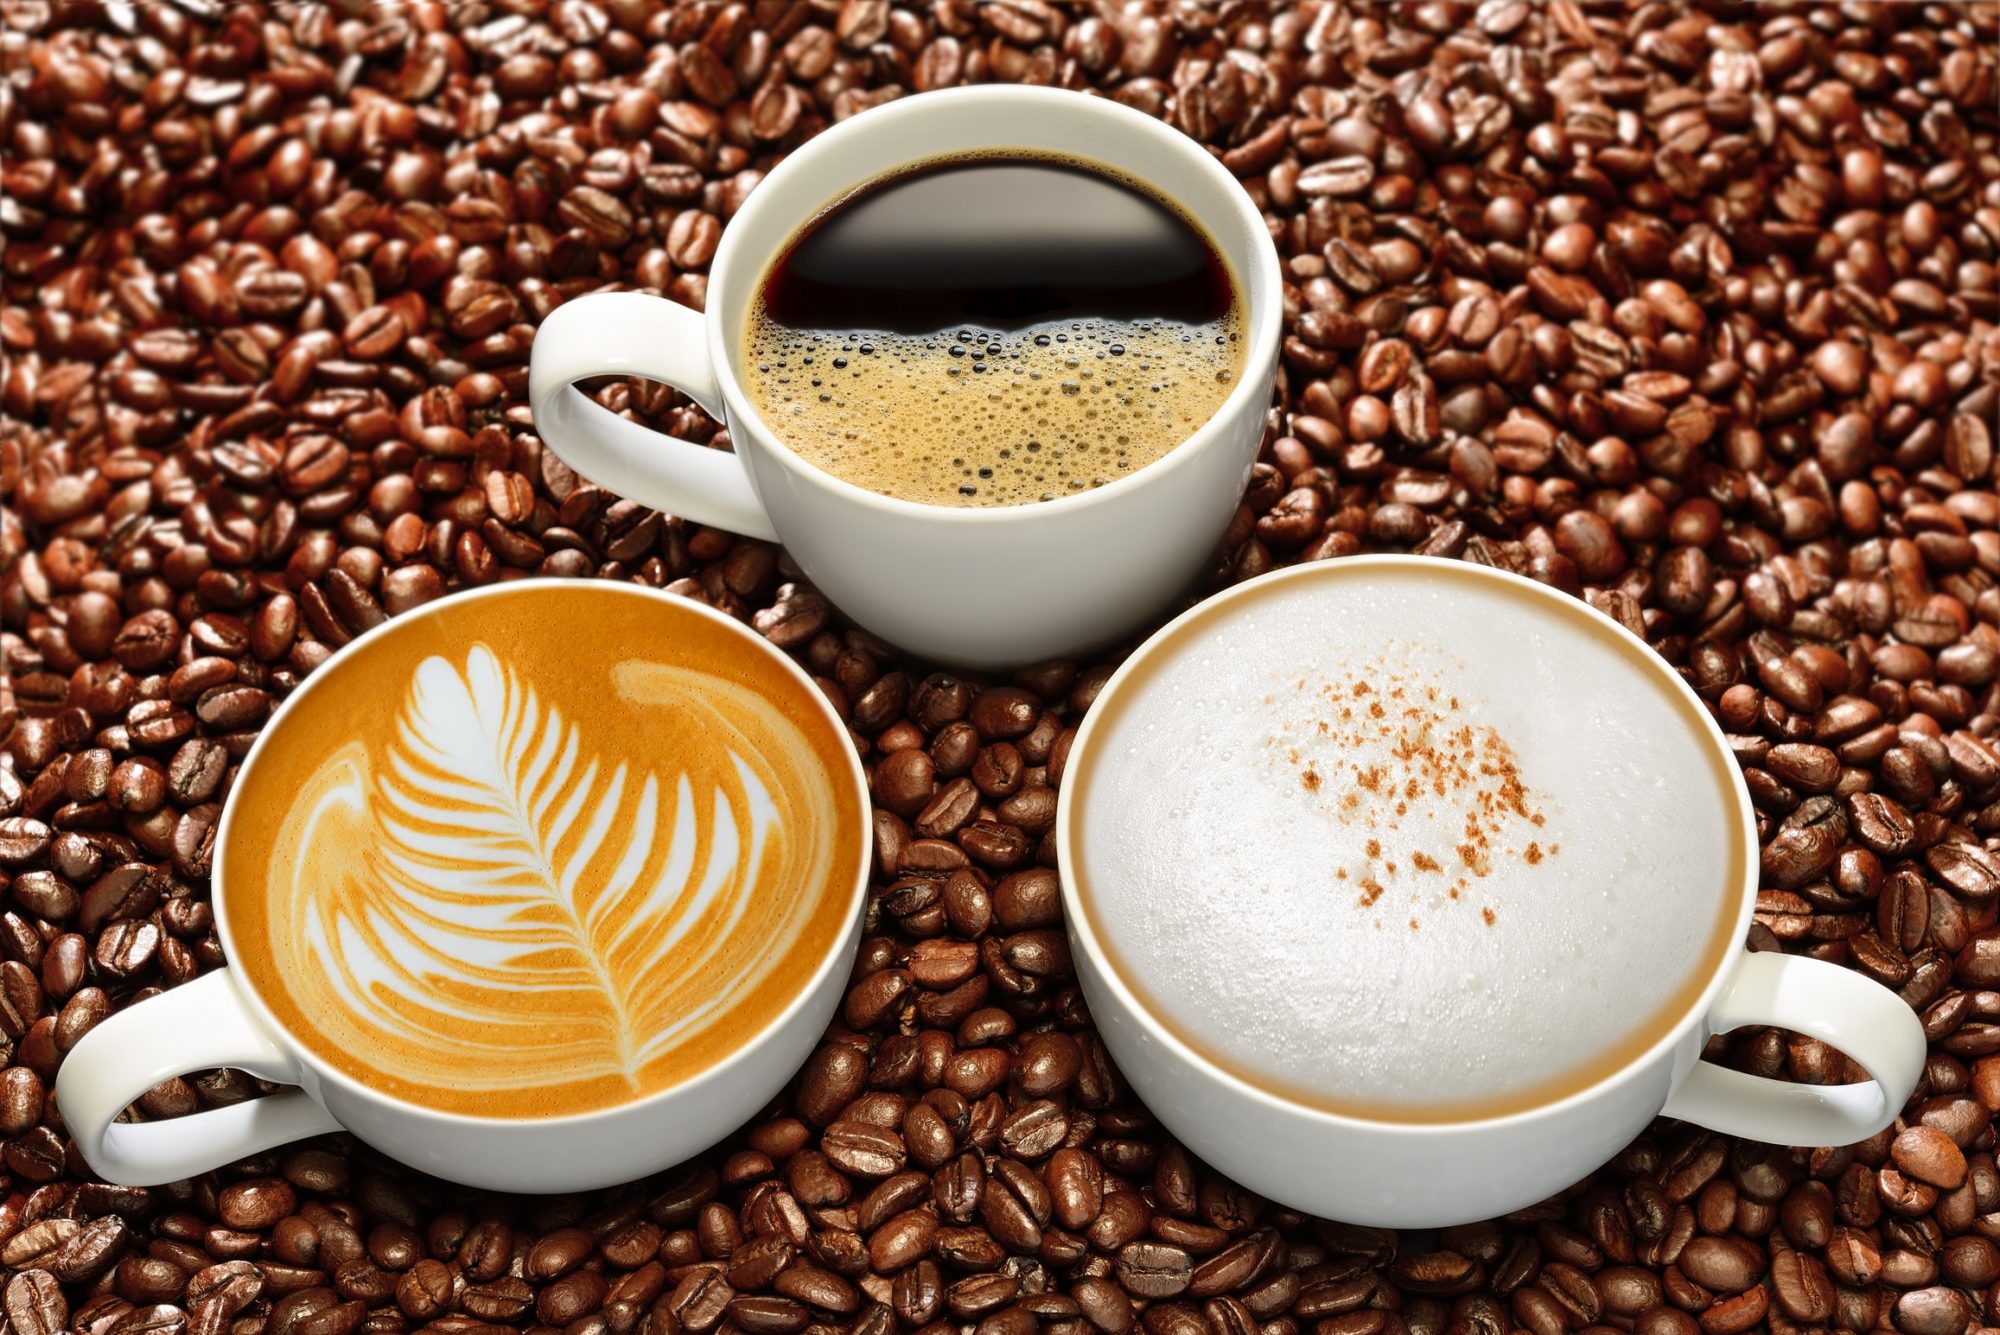 Modern Break Room Solutions New York City | Single Cup Brew Coffee | Refreshment Equipment